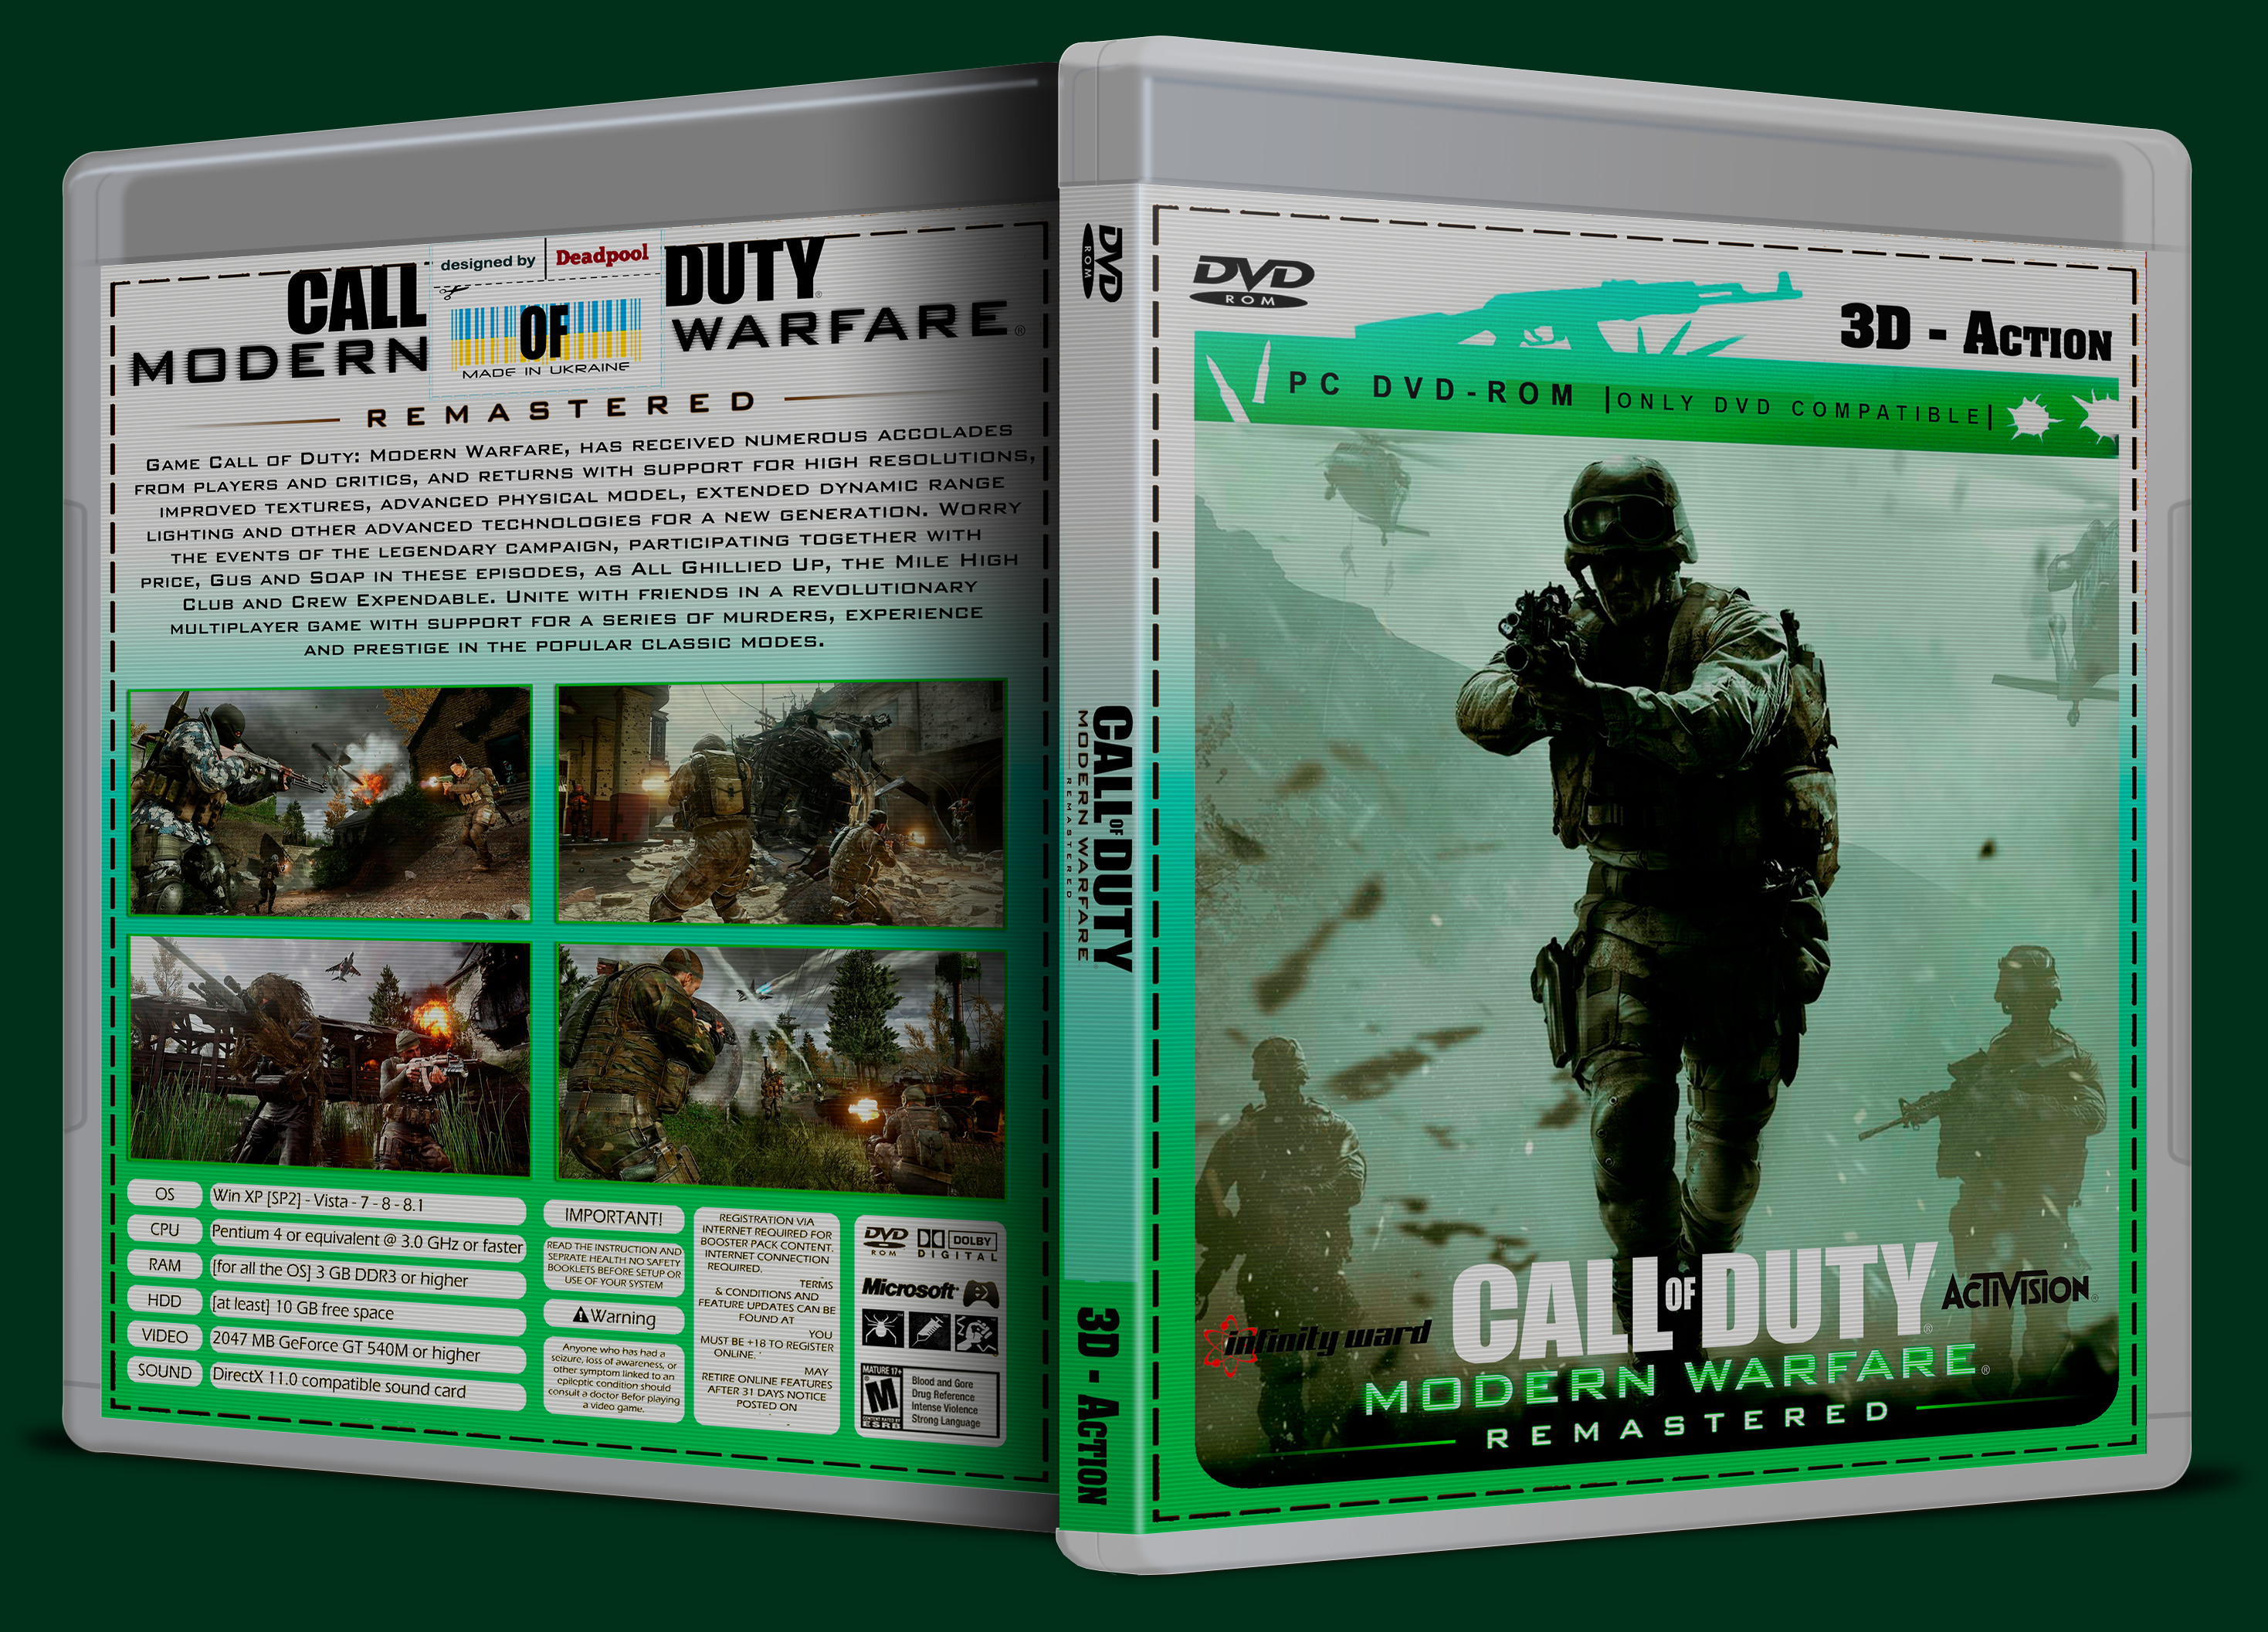 Call of Duty Modern Warfare Remastered box cover